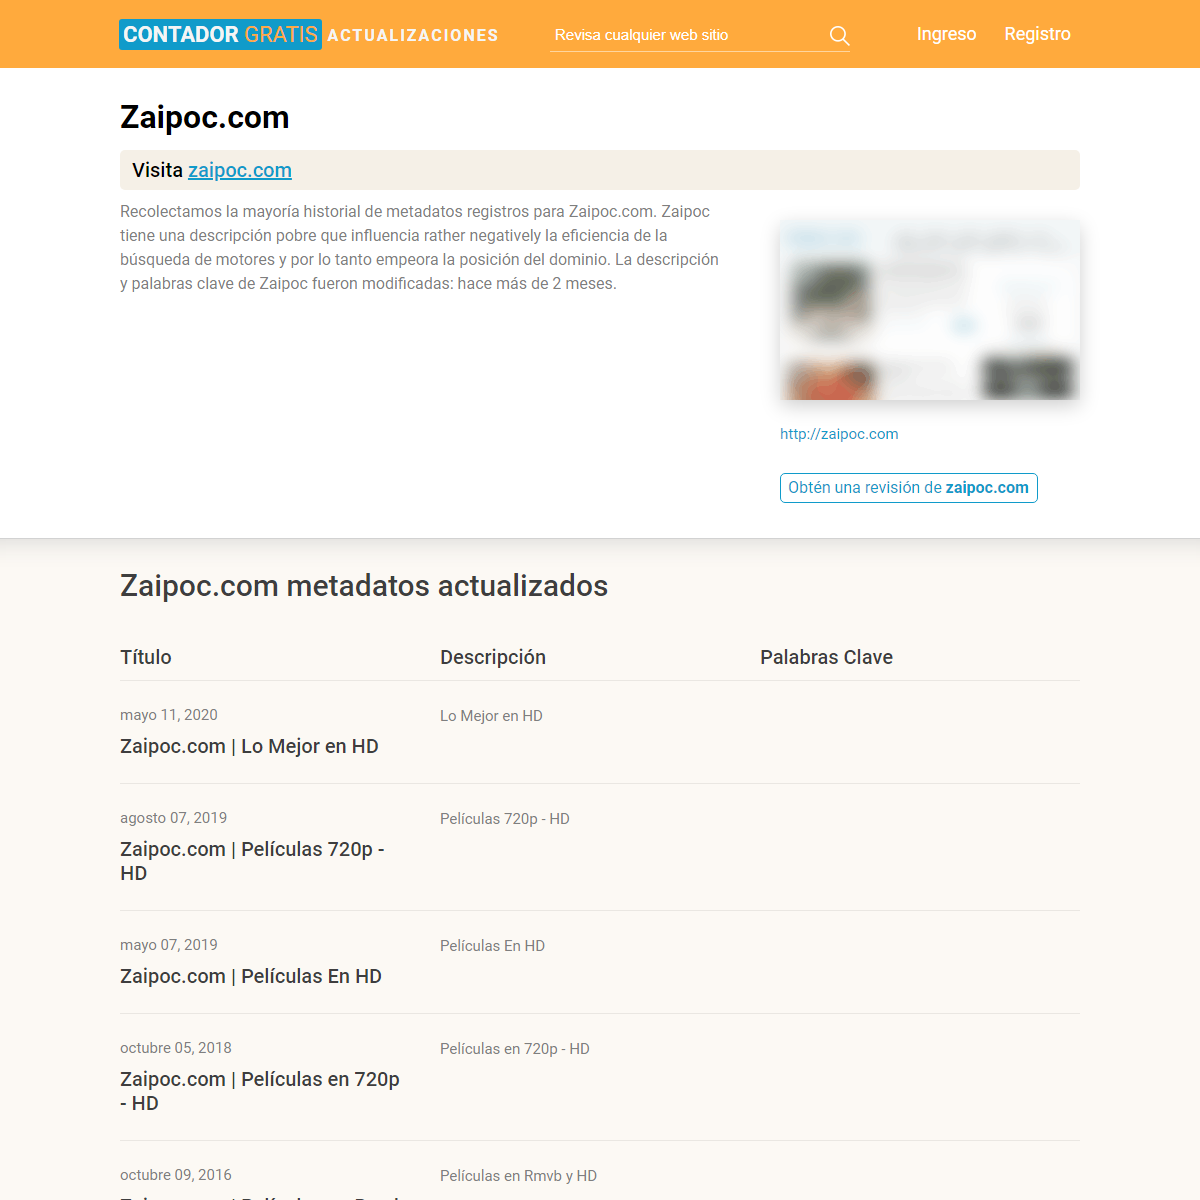 A complete backup of http://actualizaciones.contadorgratis.es/zaipoc.com